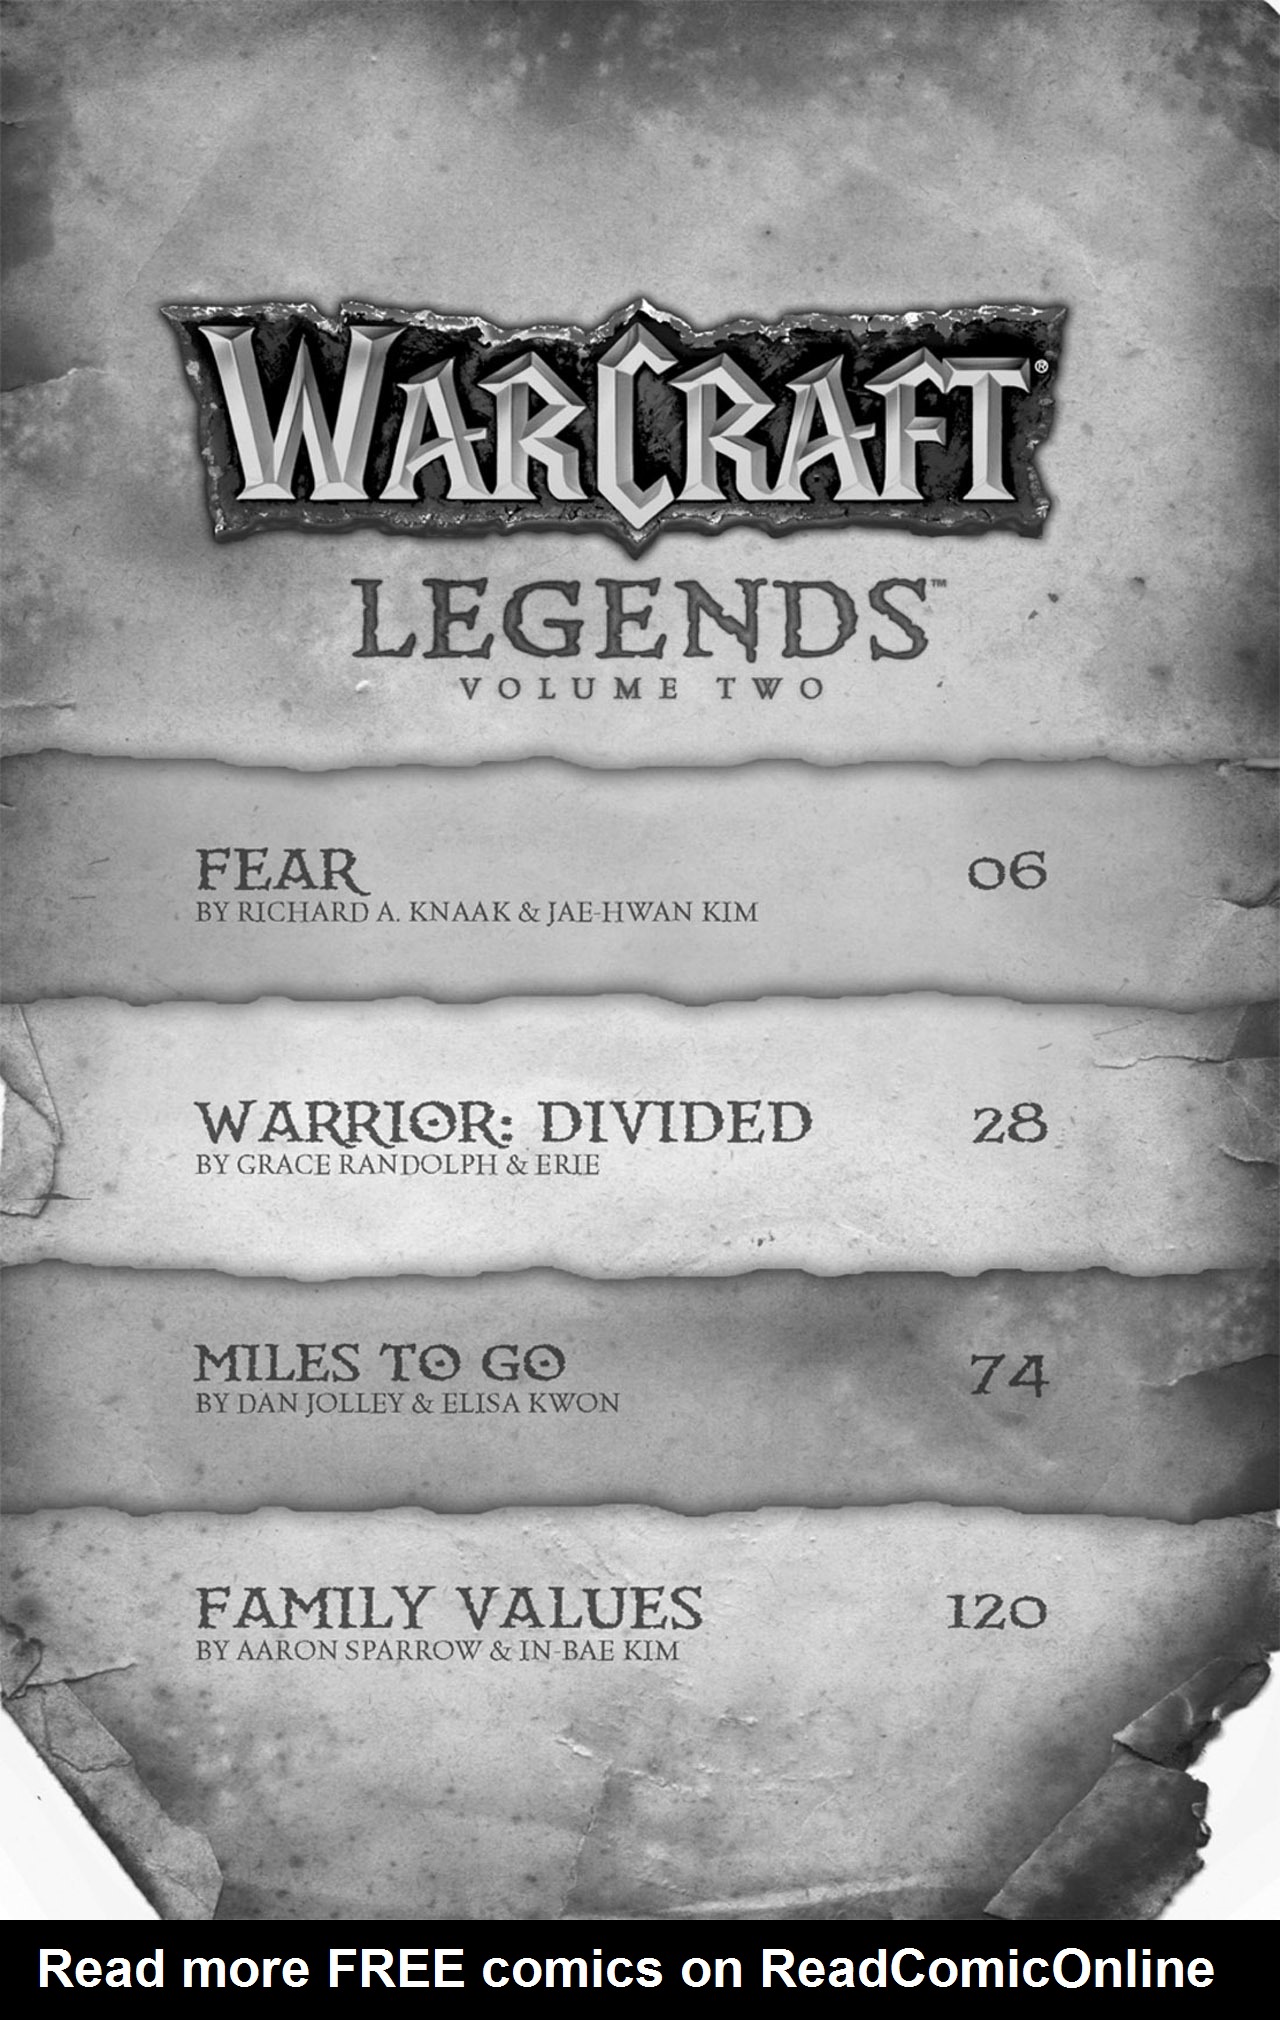 Read online Warcraft: Legends comic -  Issue # Vol. 2 - 4